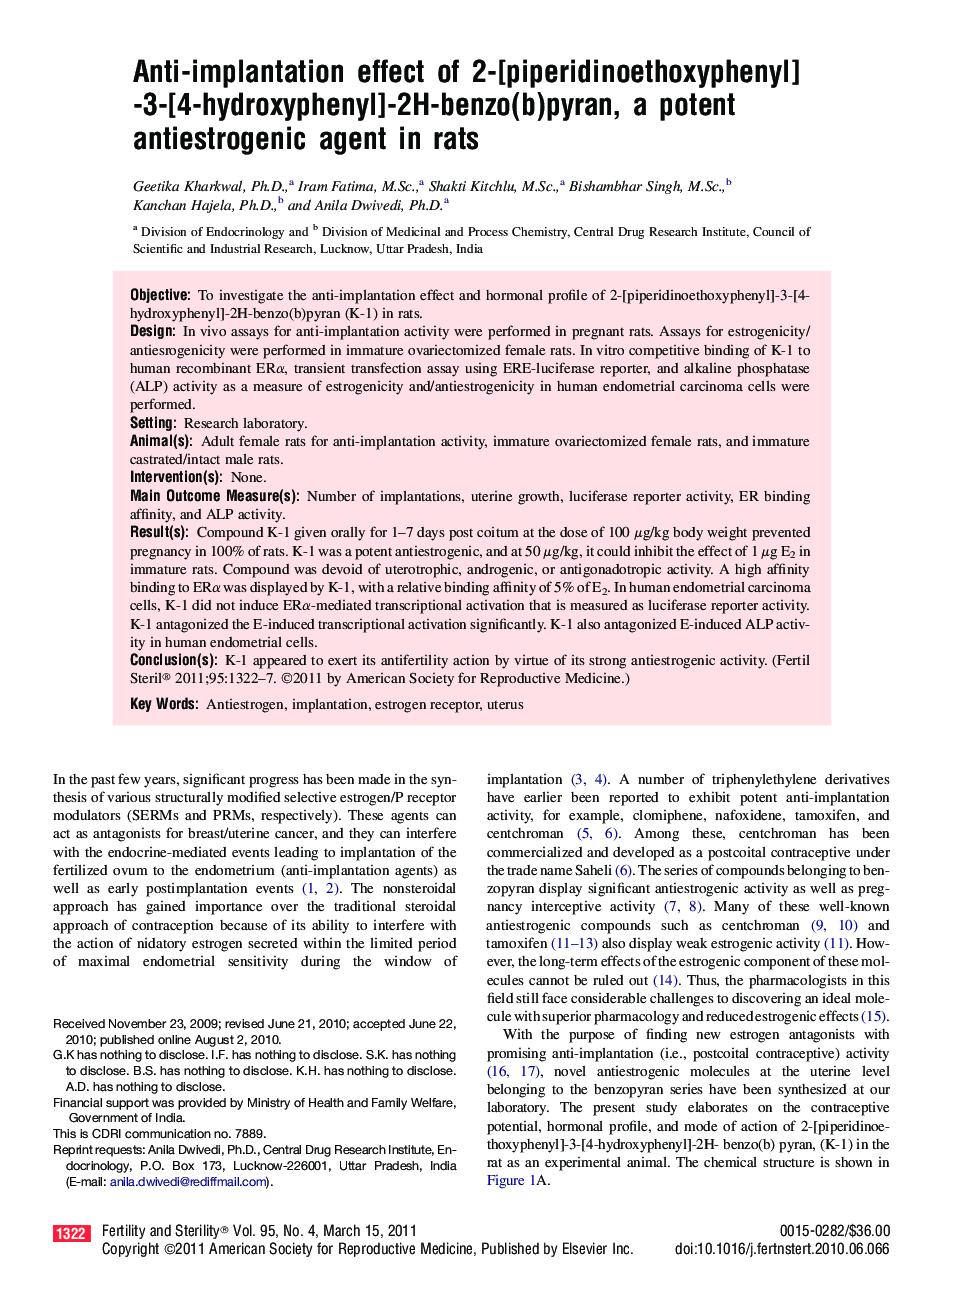 Anti-implantation effect of 2-[piperidinoethoxyphenyl]-3-[4-hydroxyphenyl]-2H-benzo(b)pyran, a potent antiestrogenic agent in rats